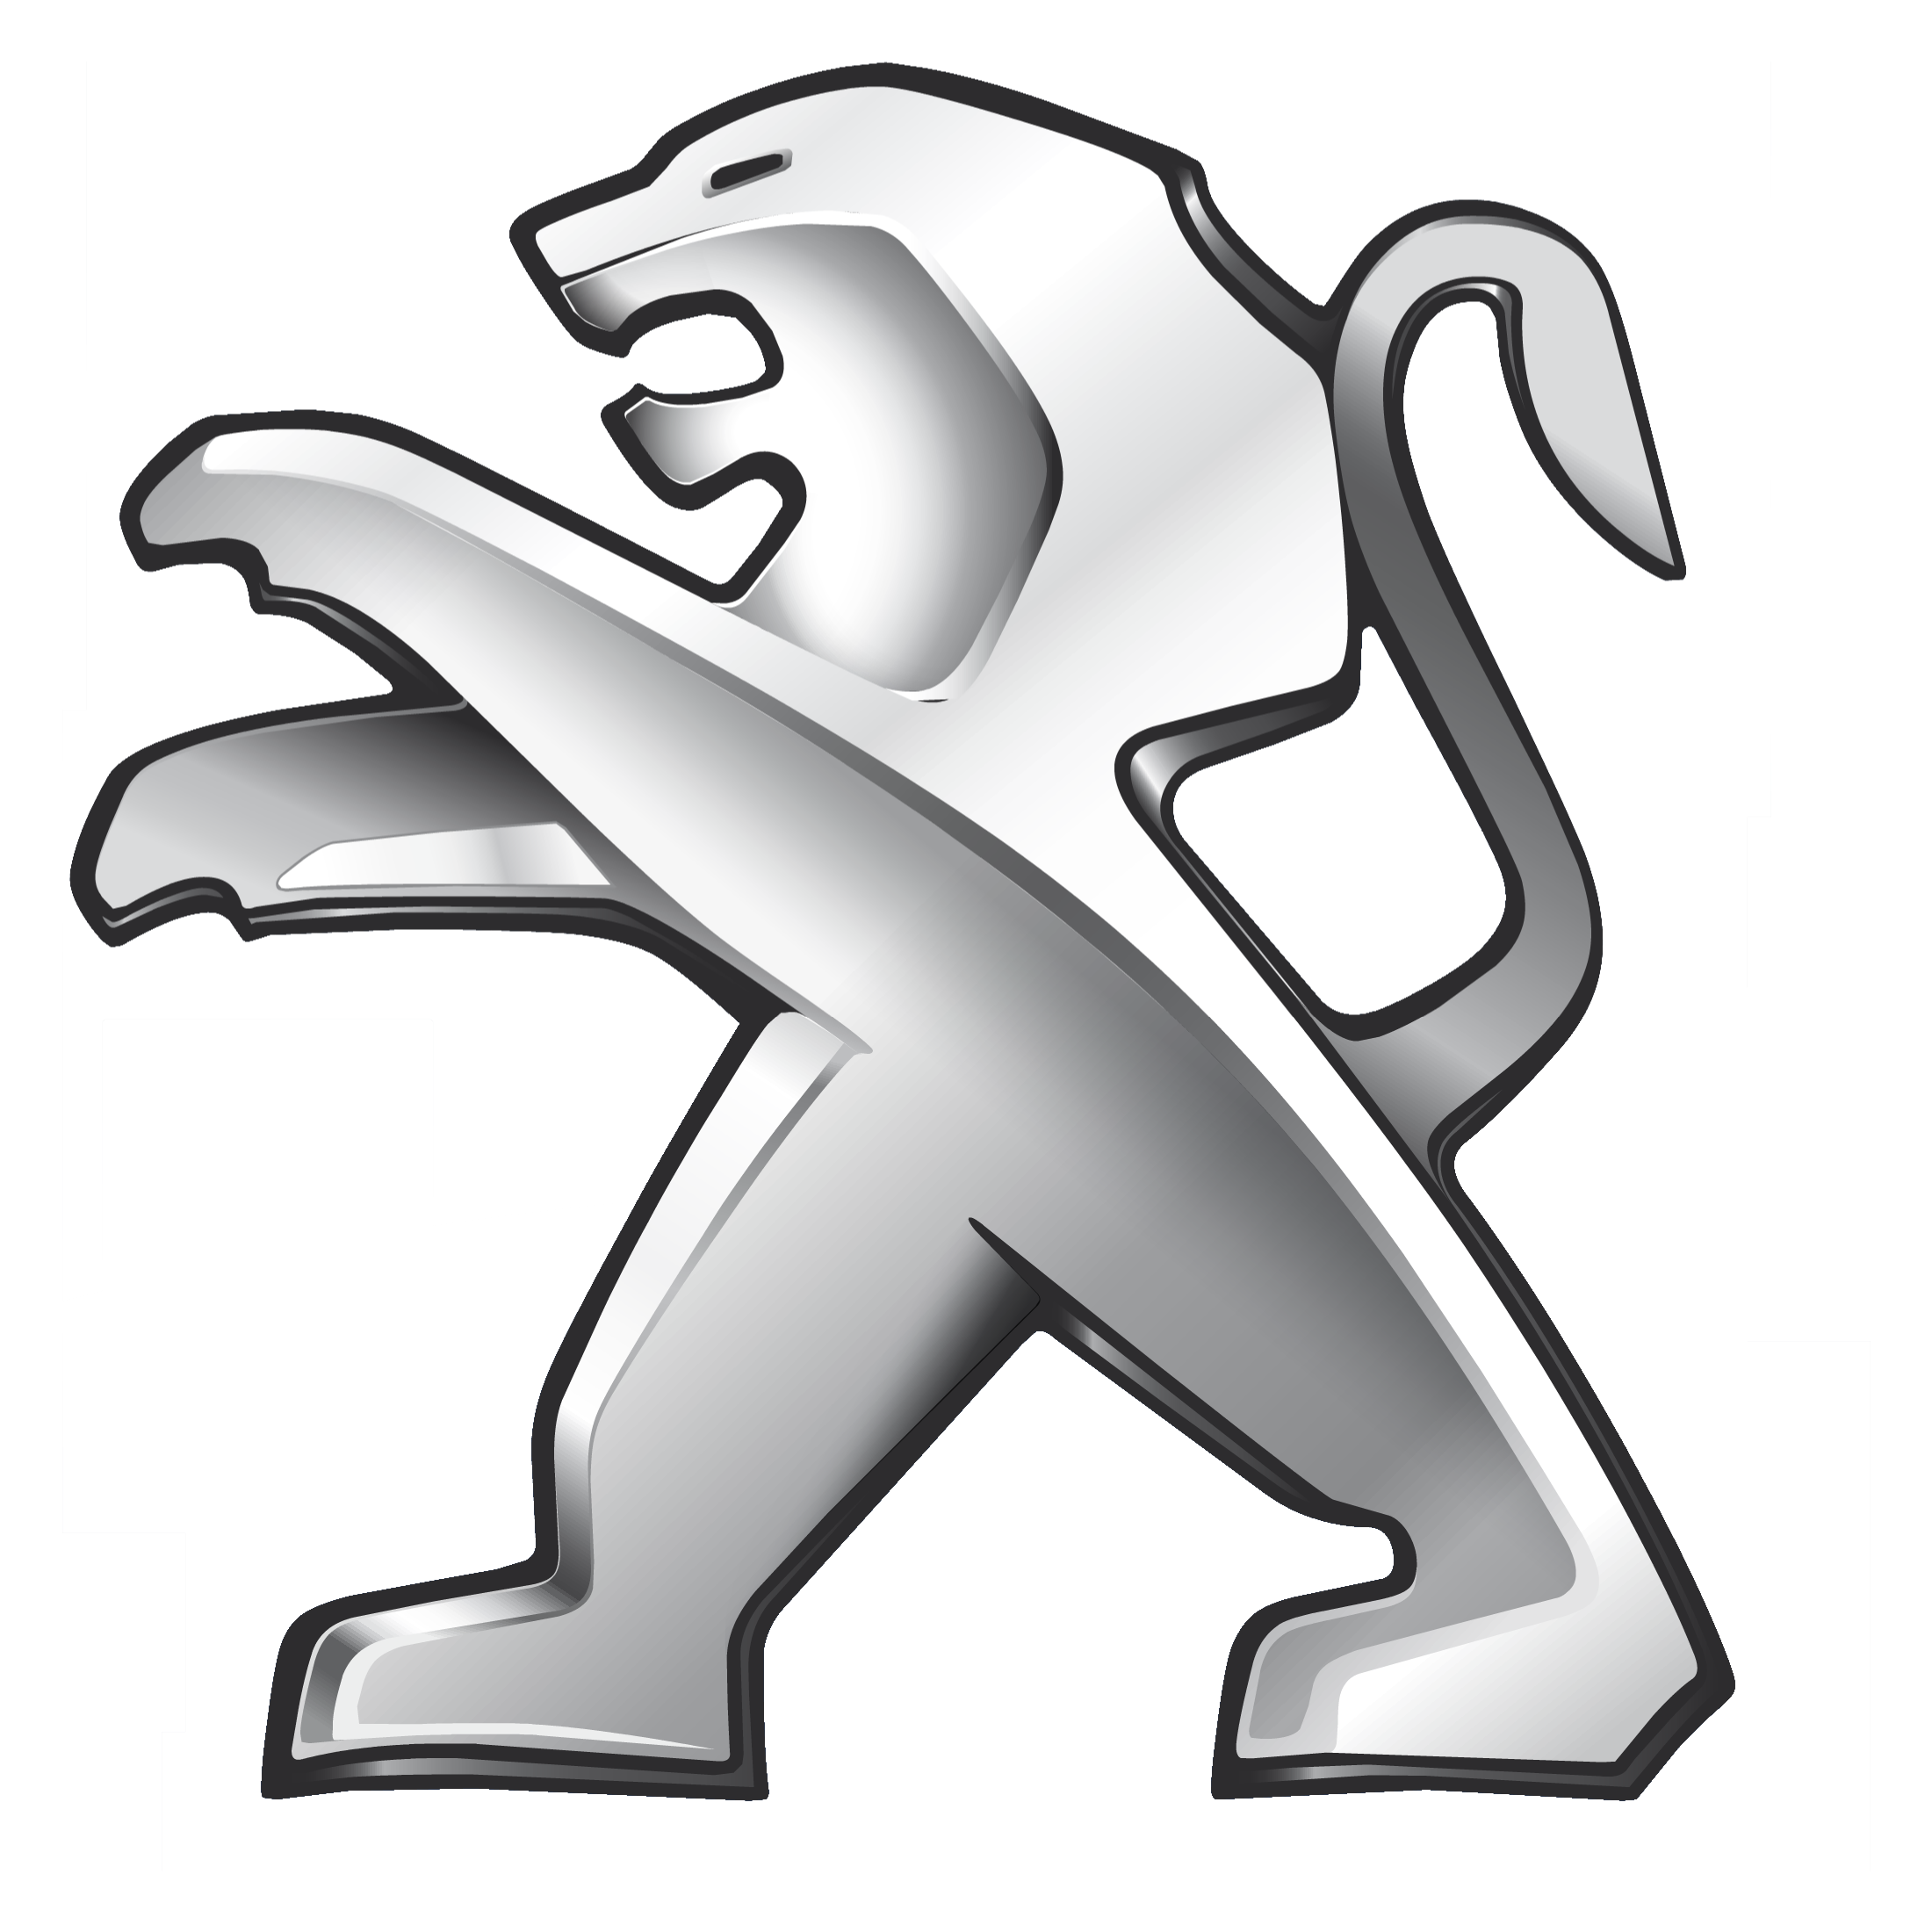 Peugeot Auto Logo - Kostenloses Foto auf Pixabay - Pixabay